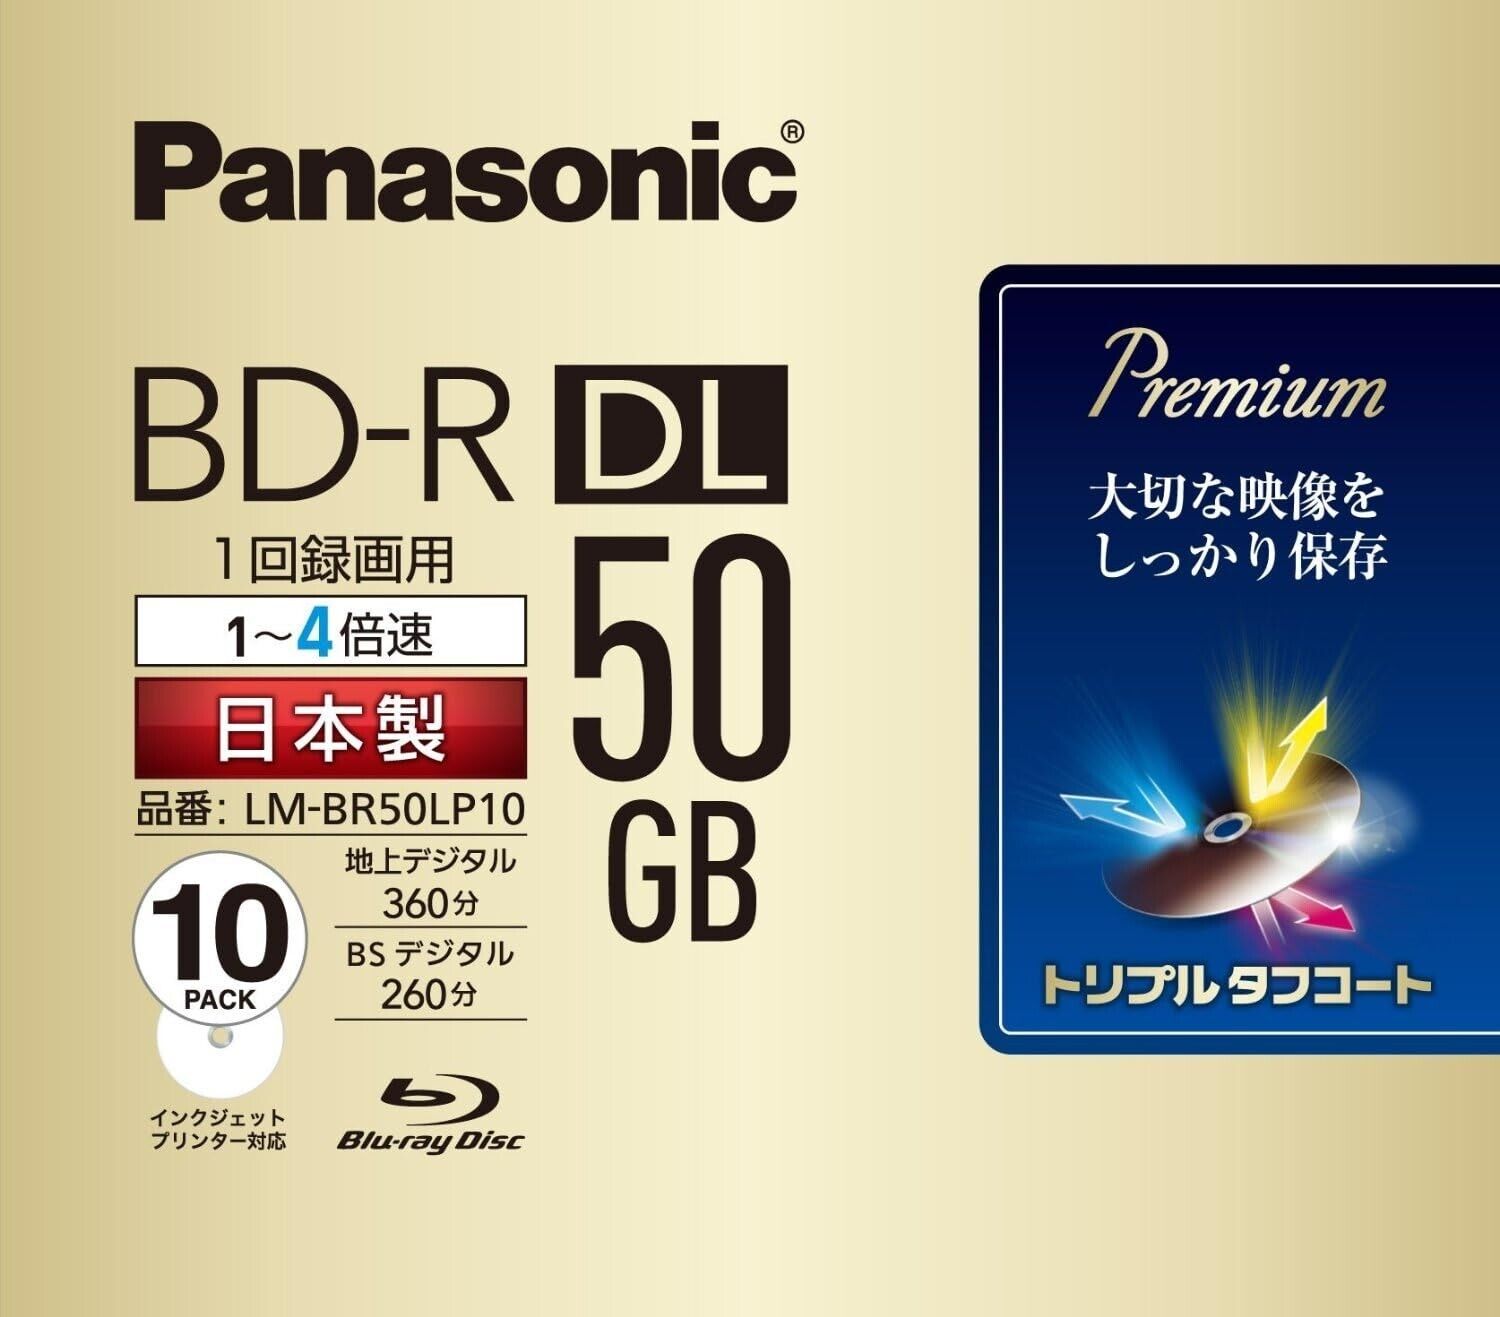 Panasonic Blu ray BD R DL 50GB 4x Blu-ray 10 pack JAPAN OFFICIAL IMPORT NEW